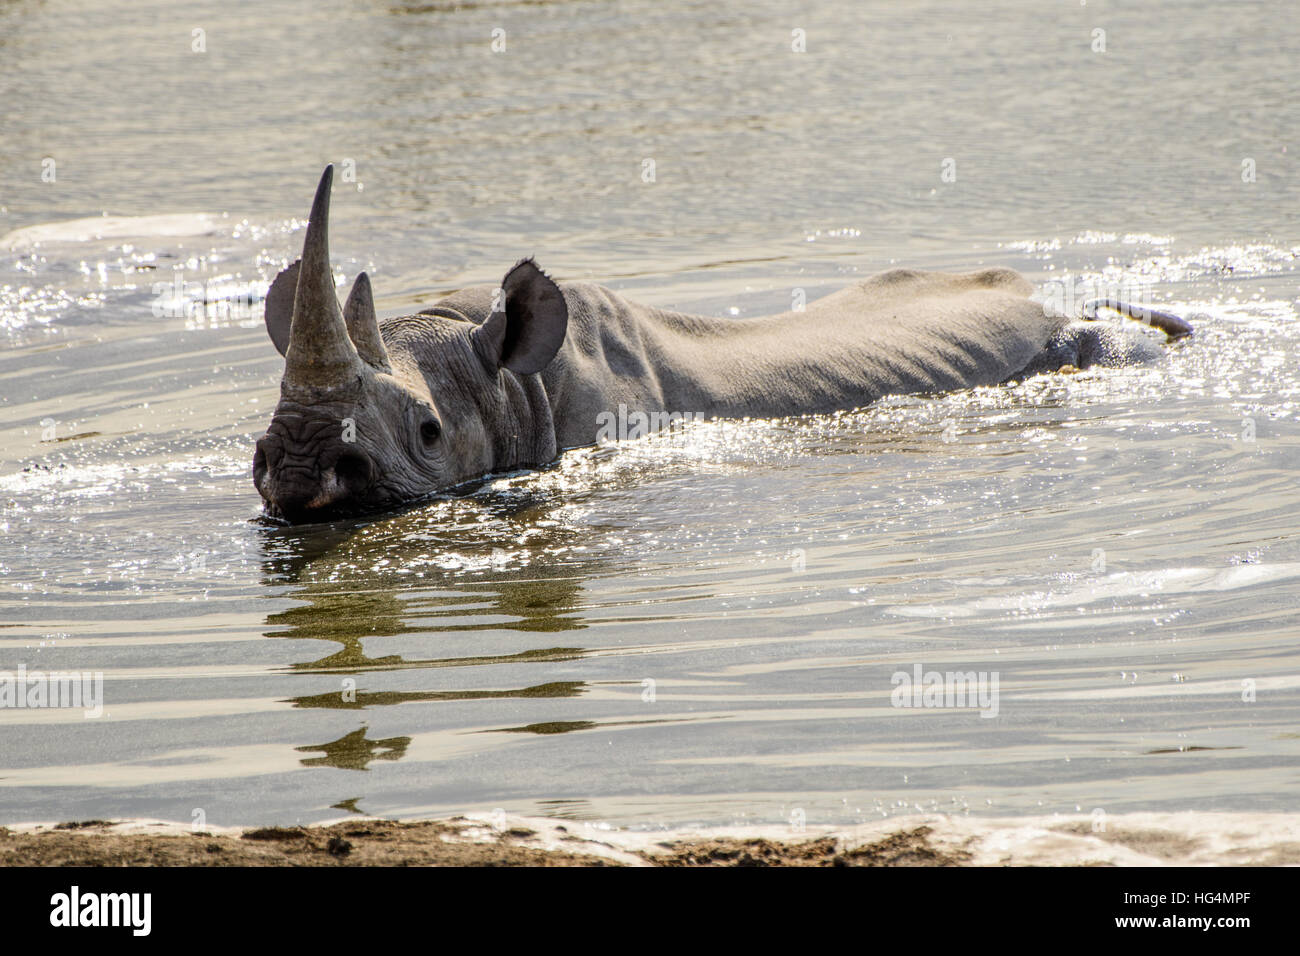 rhino bathing at the waterhole Stock Photo